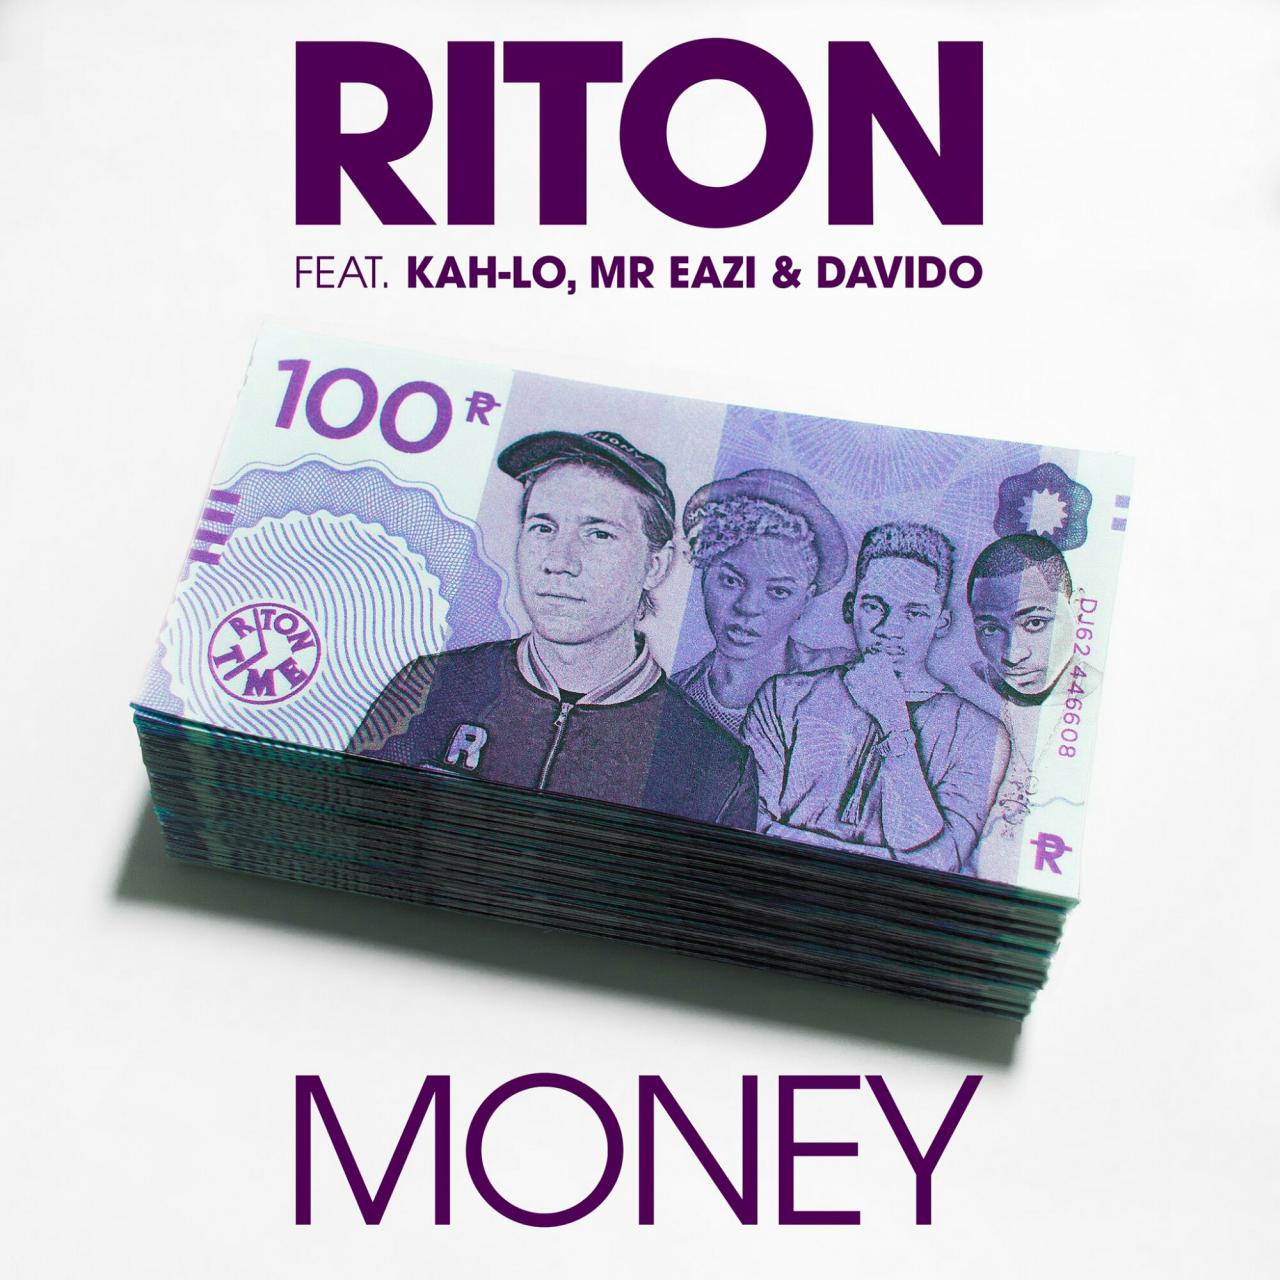 Riton – “Money” Ft. Kah-Lo, Mr Eazi, Davido